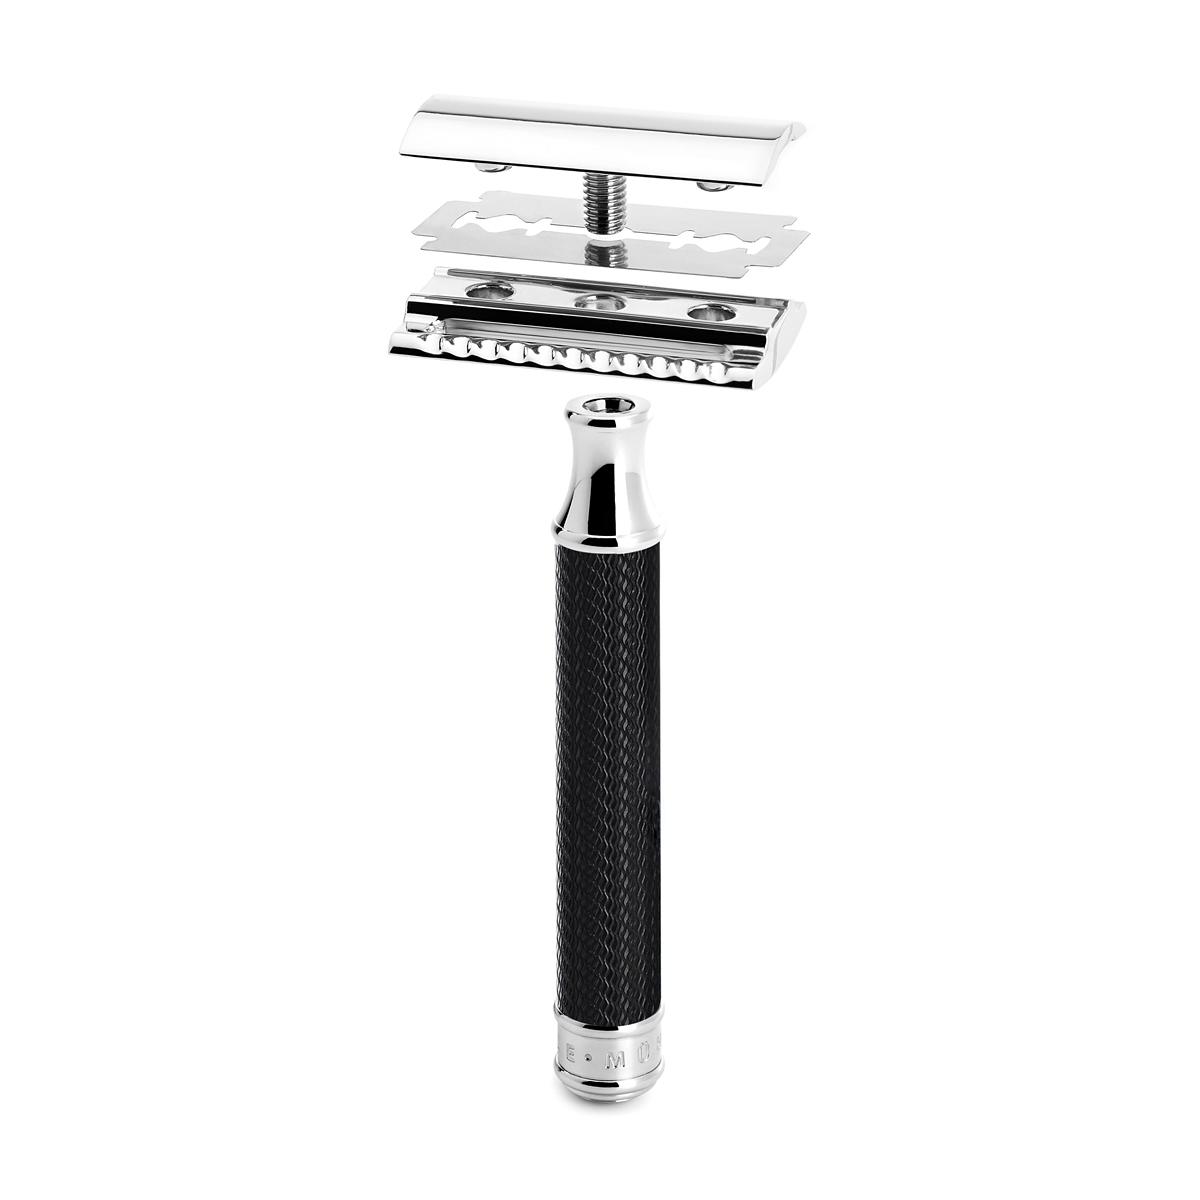 Set de afeitado Mühle tejón punta plata negro/cromo/maquinilla de afeitar (peine cerrado)